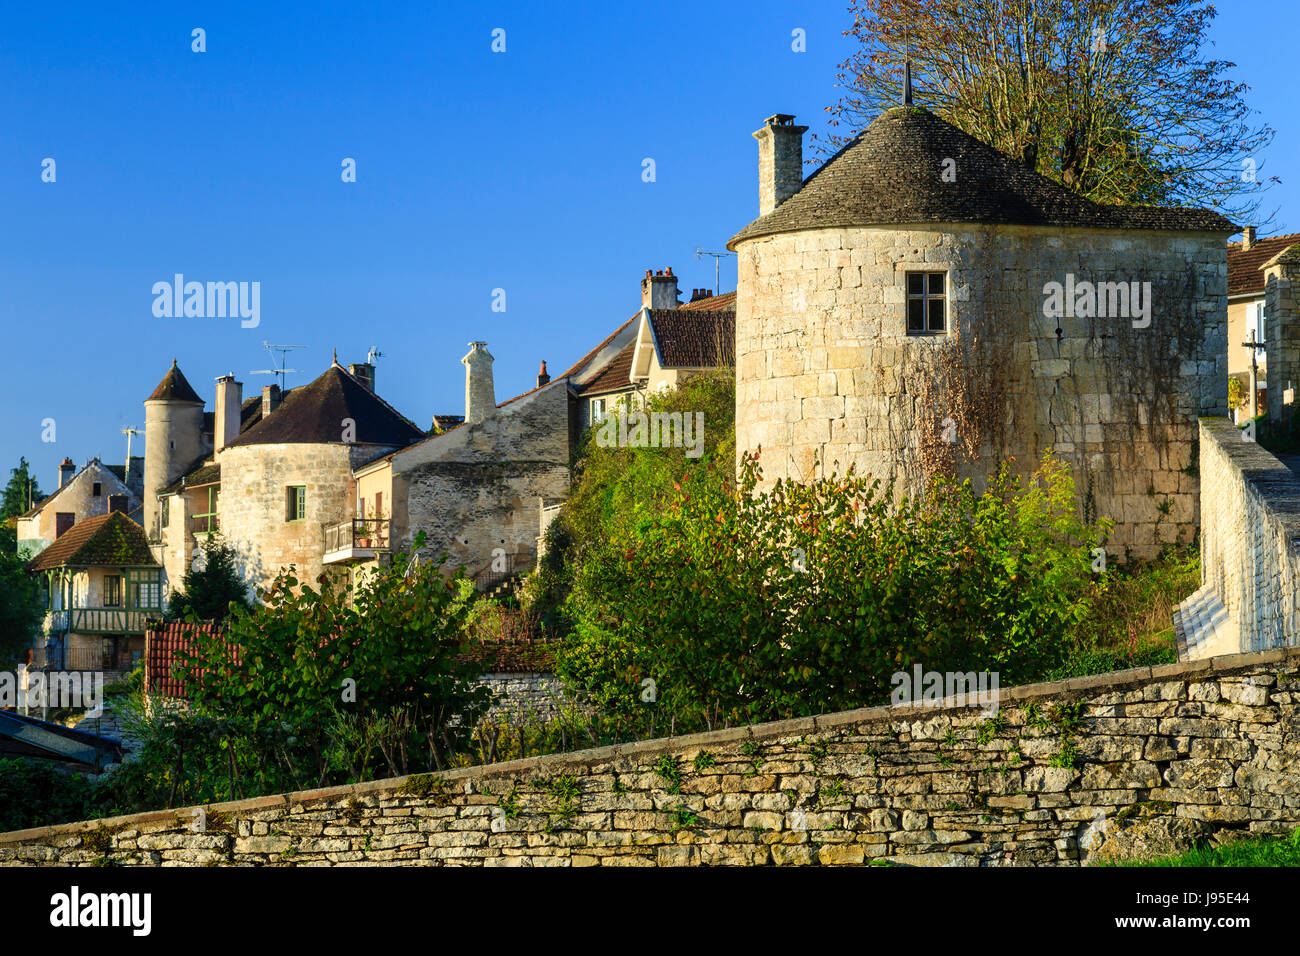 France, Yonne, Noyers or Noyers sur Serein, labelled Les Plus Beaux Villages de France (Most beautiful Villages of France), village fortifications Stock Photo